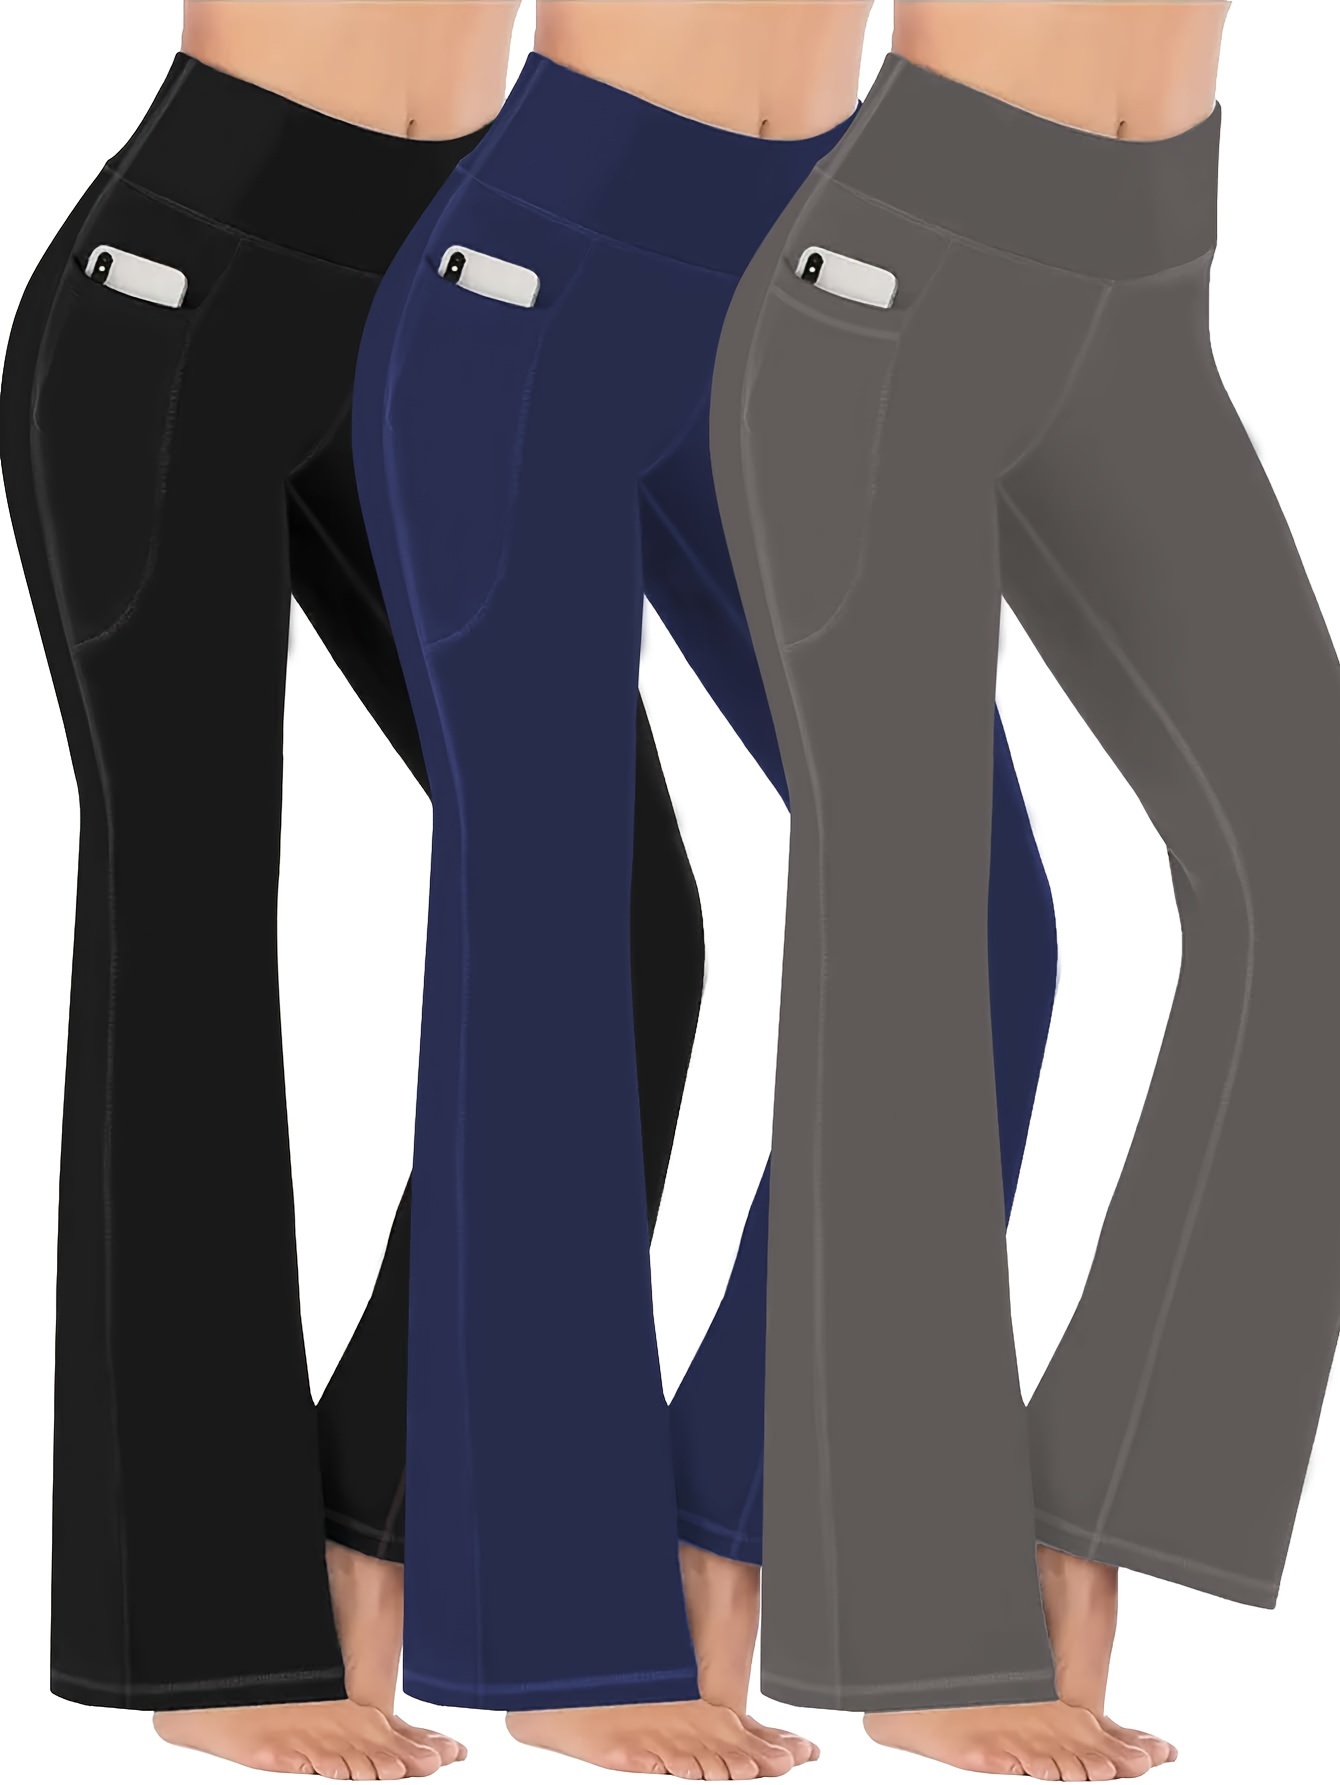 Iuga Womens Leggings Pants Medium Black Full Length Yoga Workout